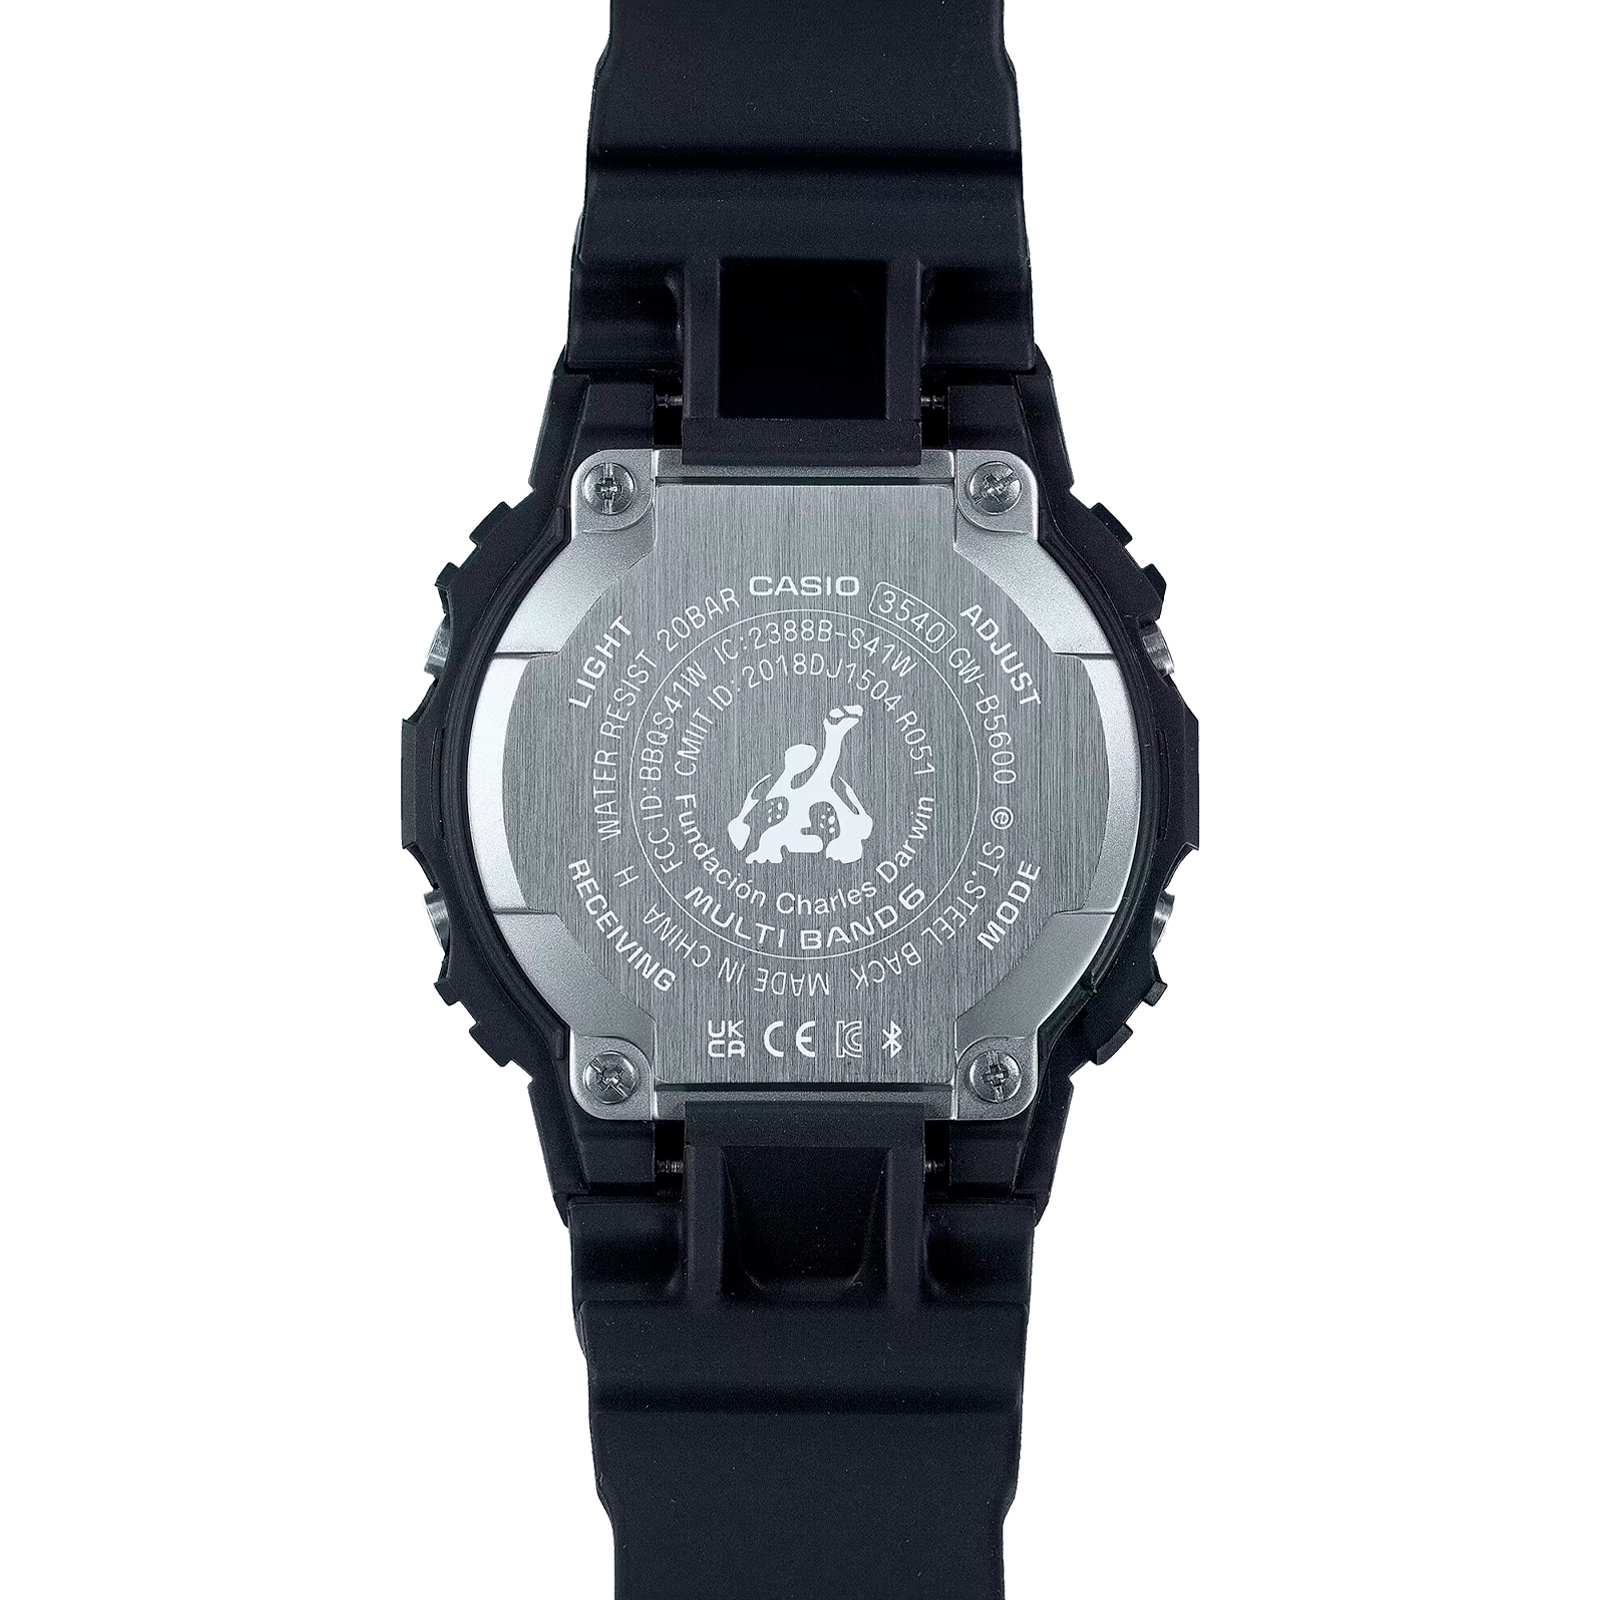 Reloj G-SHOCK GW-B5600CD-1A2 Resina Hombre Negro